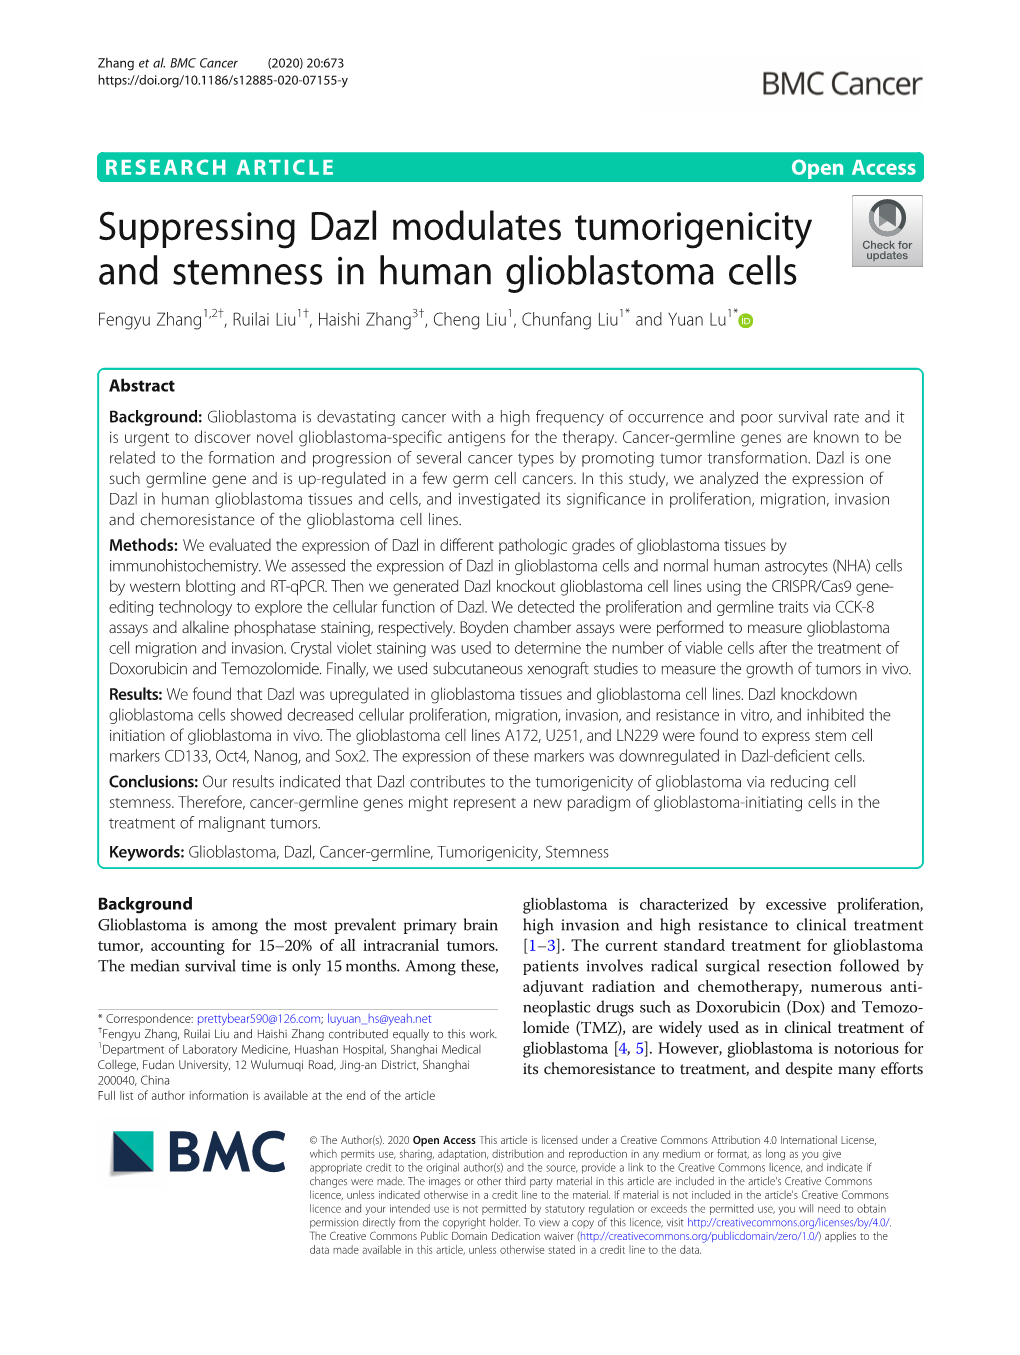 Suppressing Dazl Modulates Tumorigenicity And